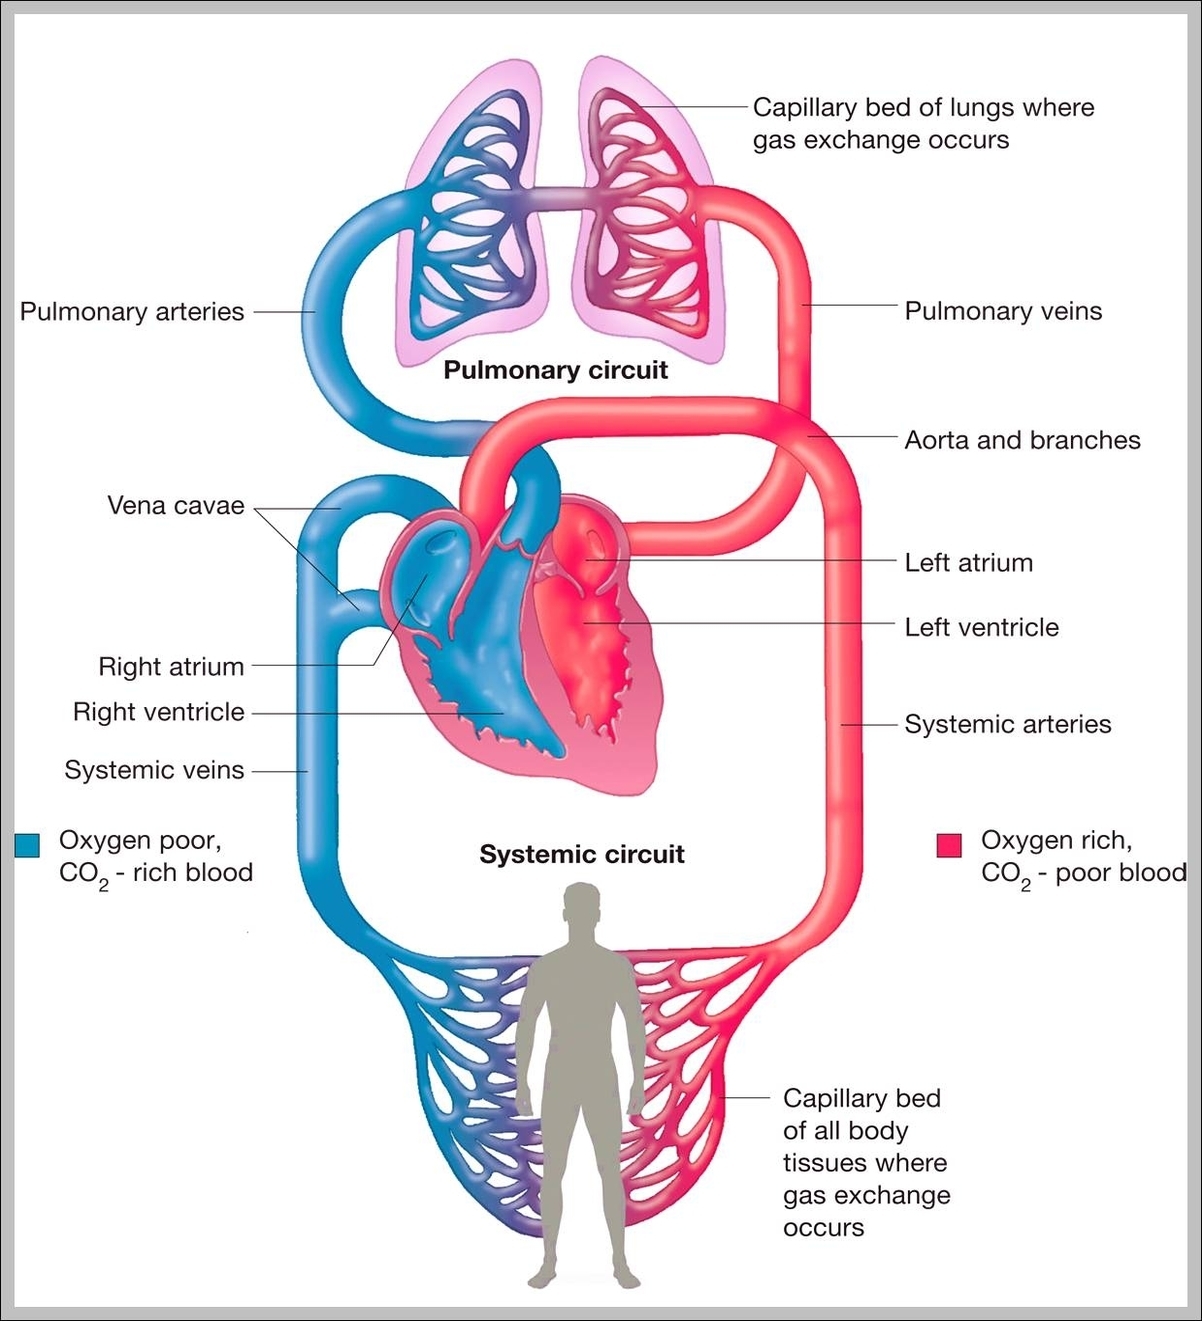 cardiovascular system blood vessels